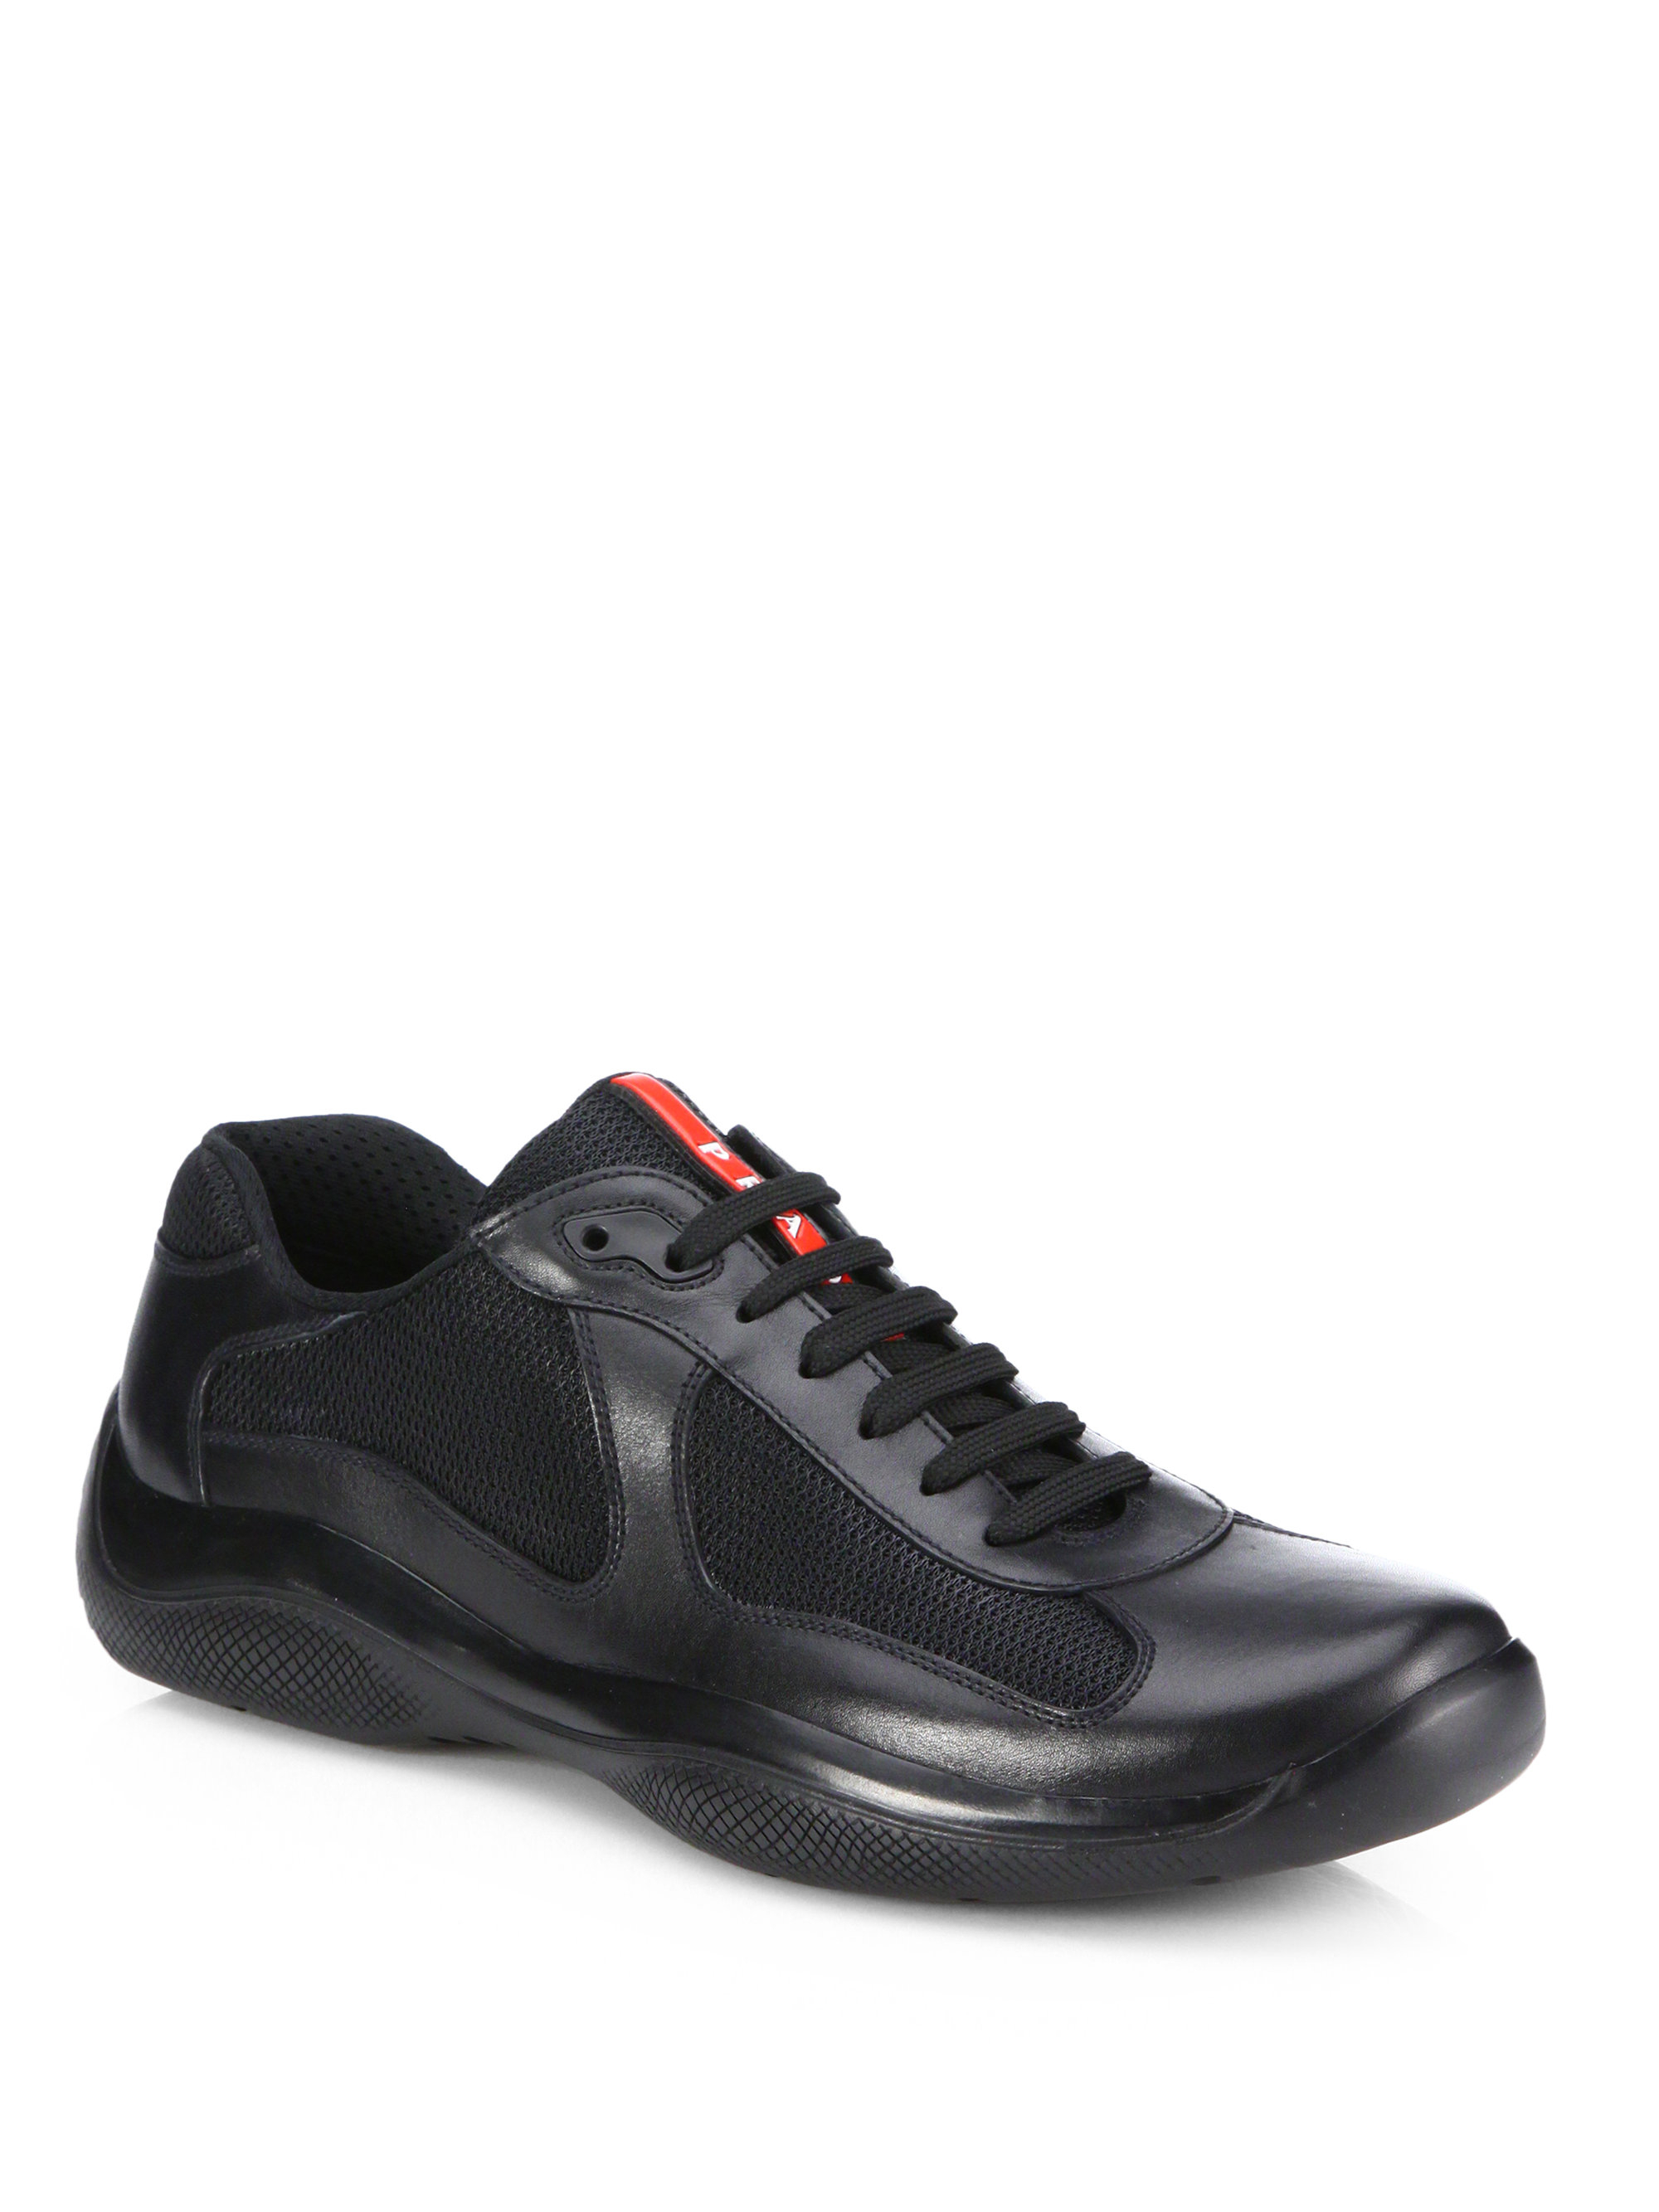 Lyst - Prada Leather & Mesh Sneakers in Black for Men